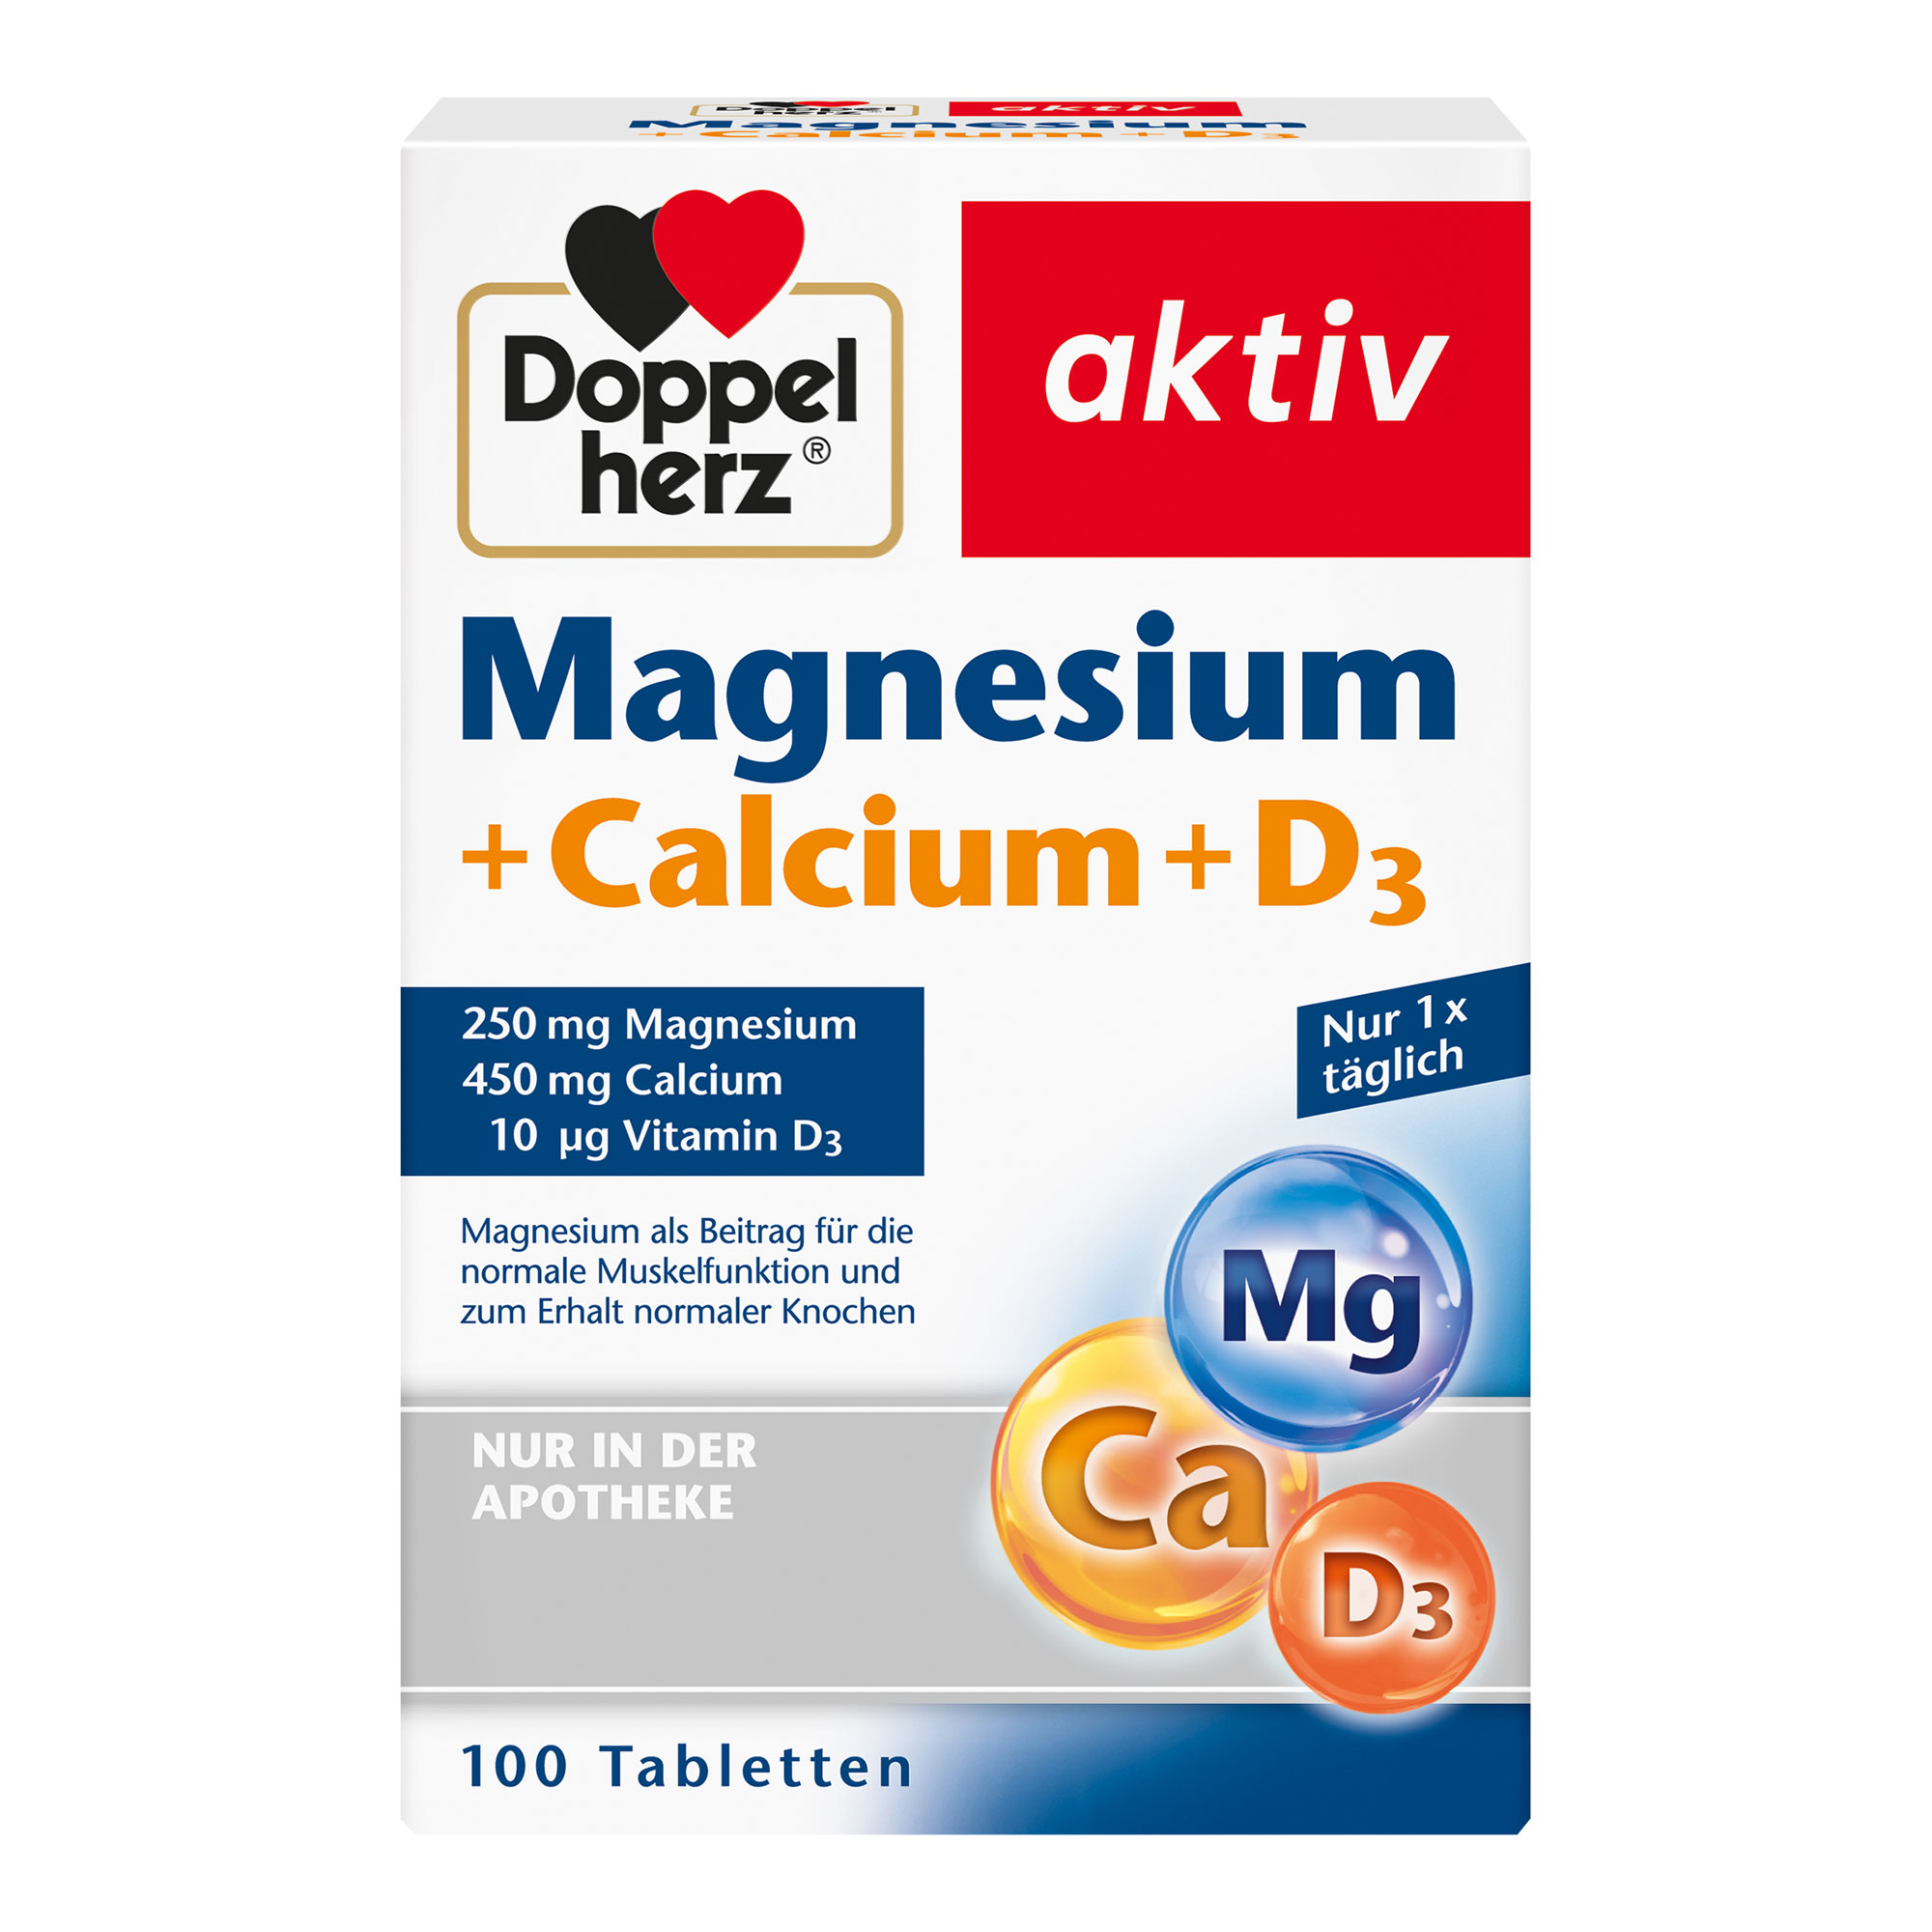 Nahrungsergänzungsmittel mit Magnesium, Calcium und Vitamin D.